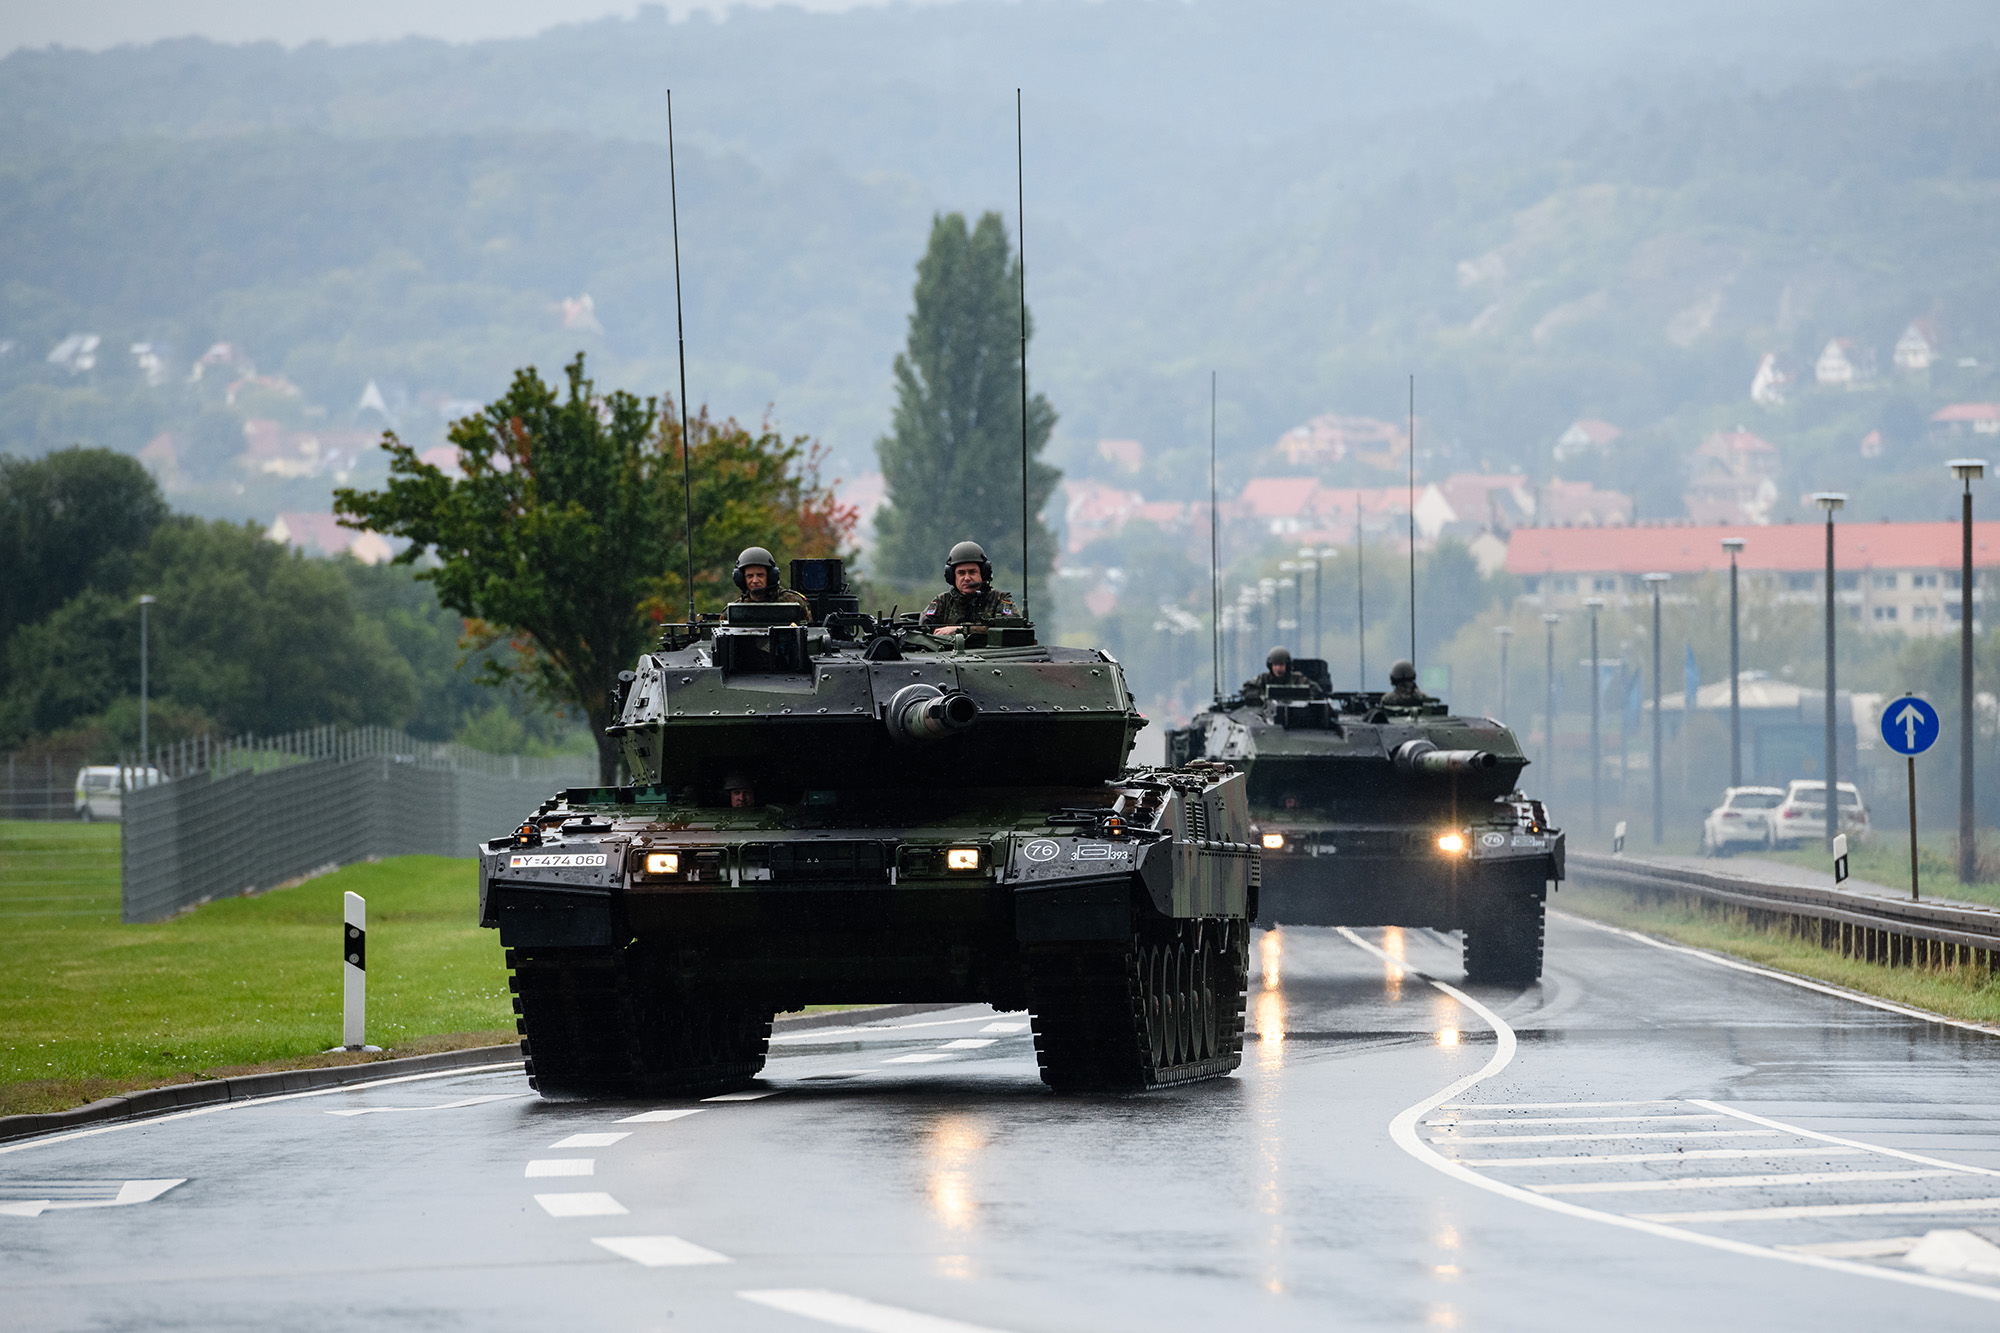 Two Leopard 2 A7V battle tanks on the road in Bad Frankenhausen, Germany, on September 15, 2021.